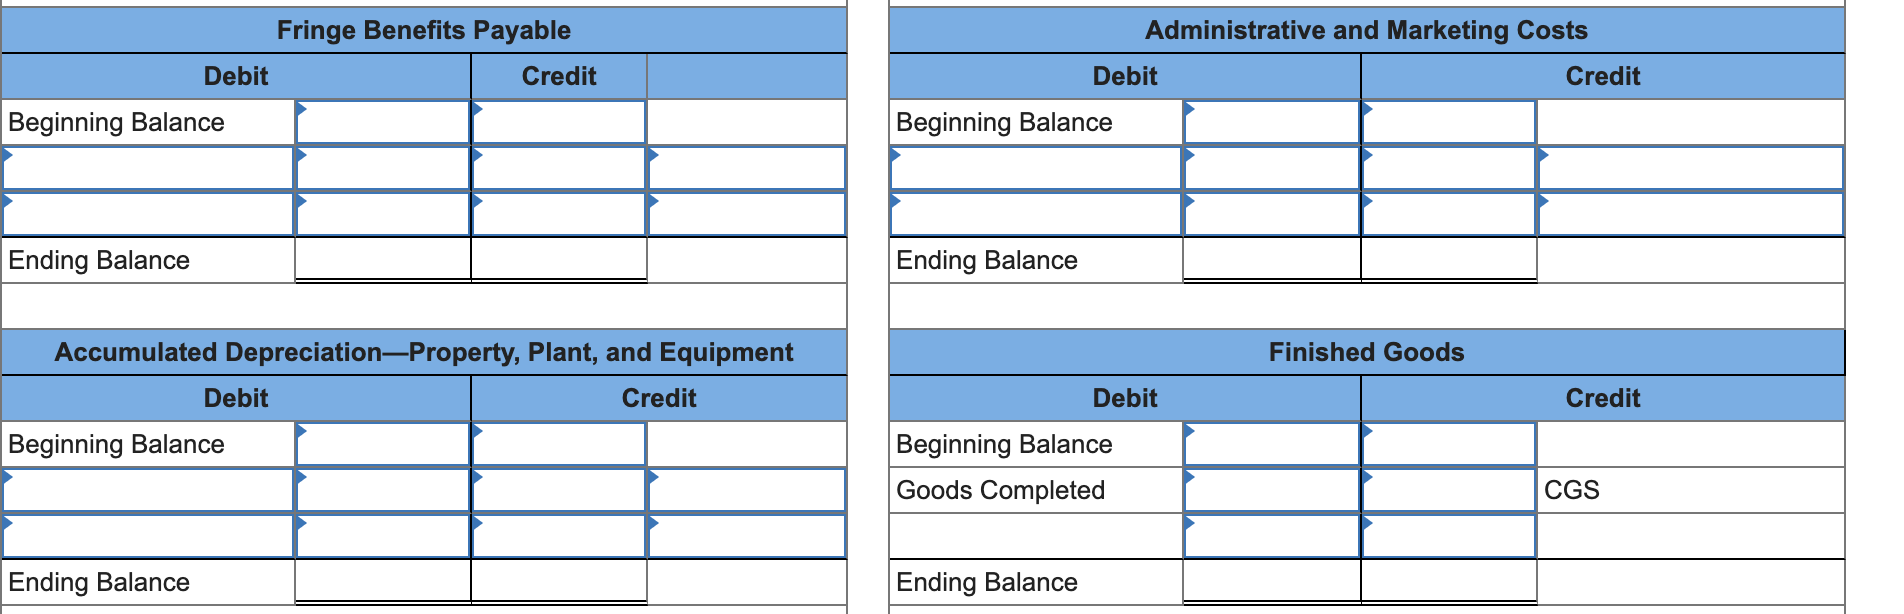 Beginning Balance Ending Balance Debit Accumulated Depreciation Property, Plant, and Equipment Credit Ending